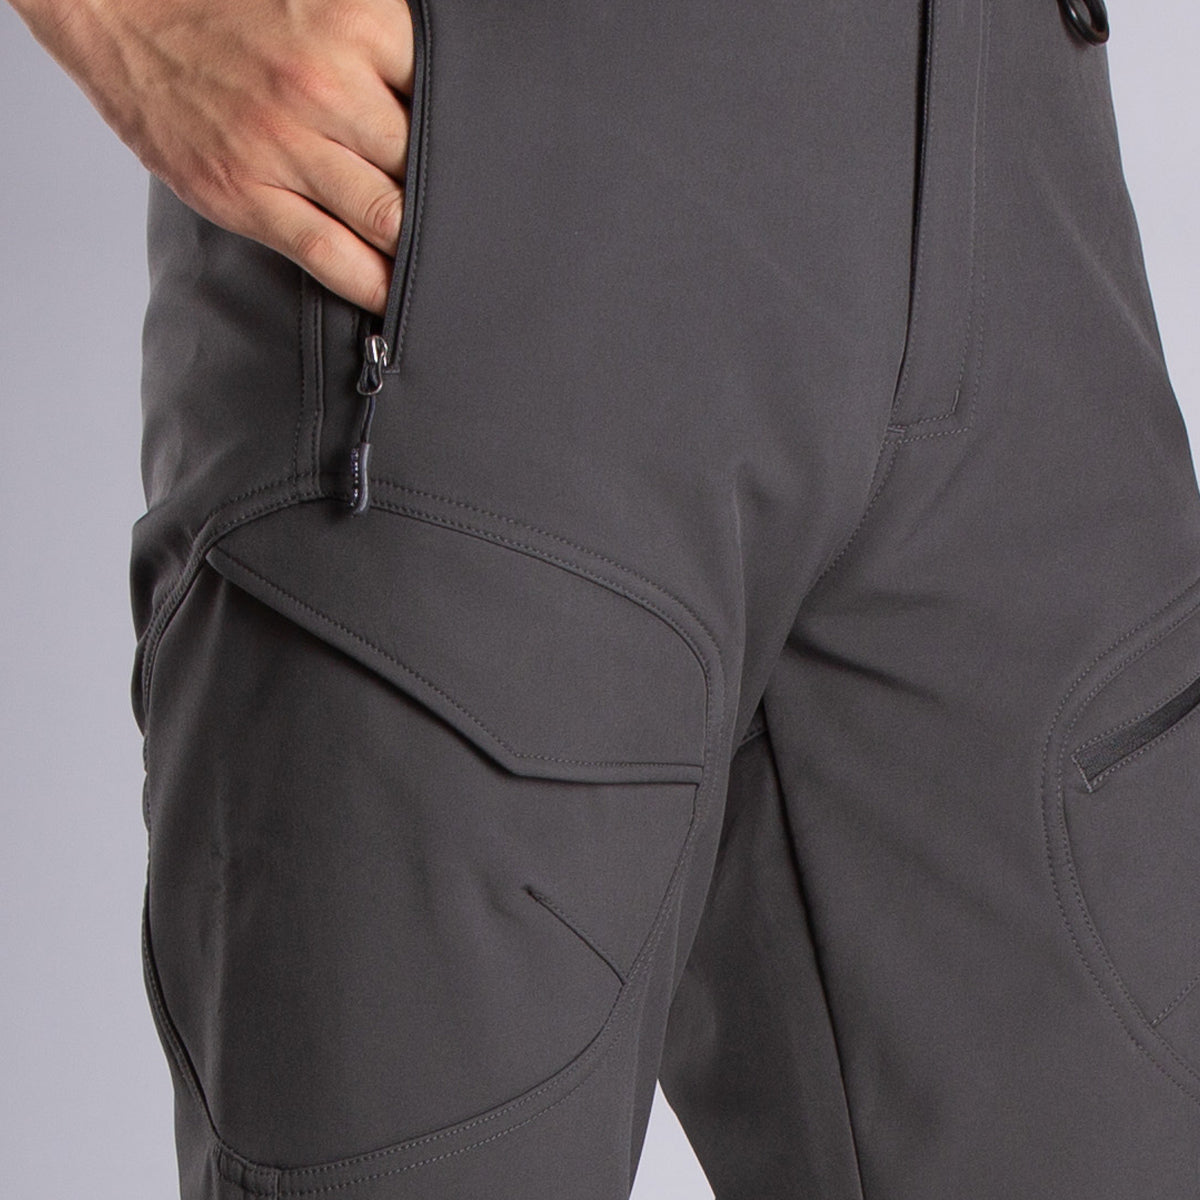 Mens NEW Fleece Lined Cargo Pants Winter Warm 6 Pockets Sizes 28 to 44 Free  Belt  eBay